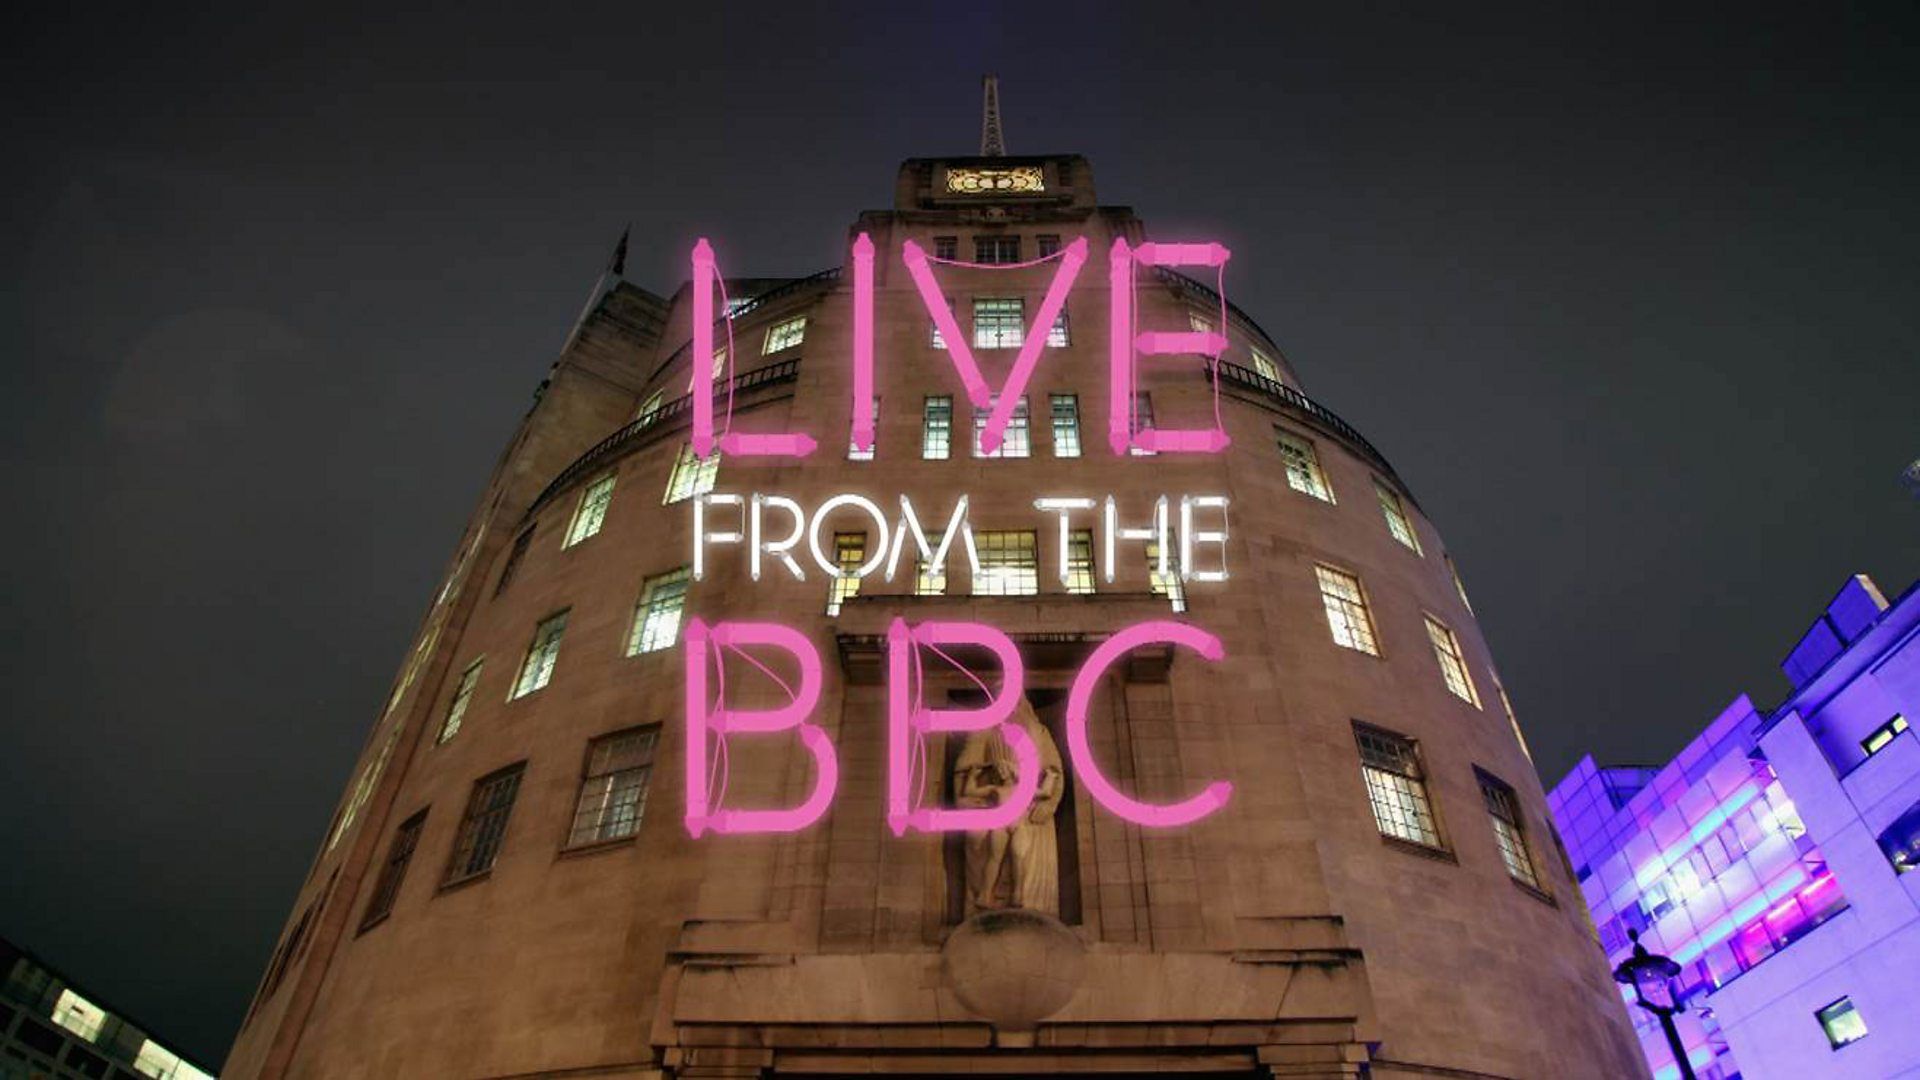 Live from the BBC ne zaman